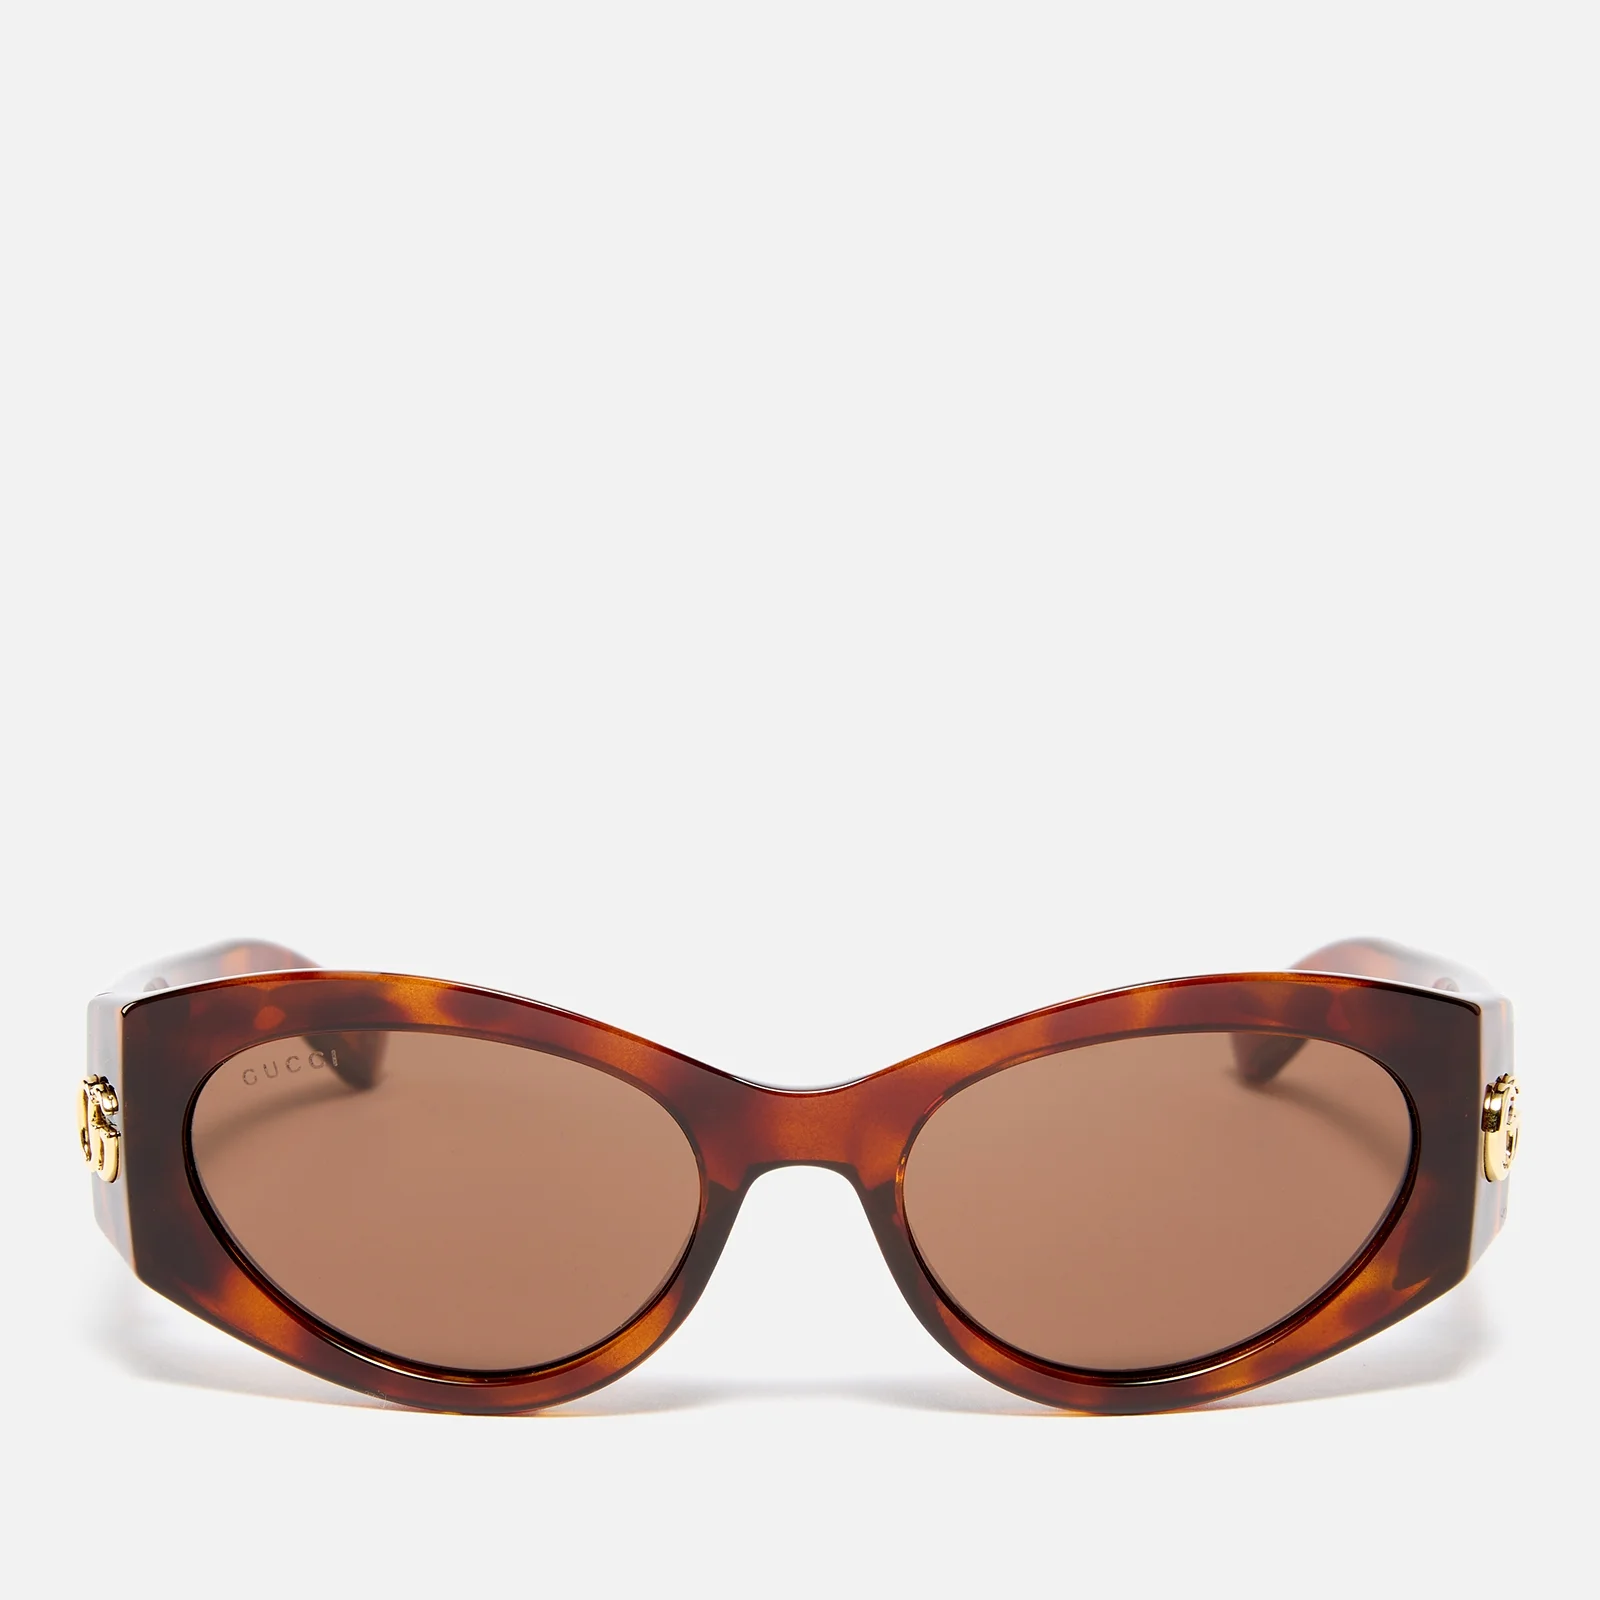 Gucci Acetate Cat Eye Sunglasses Image 1